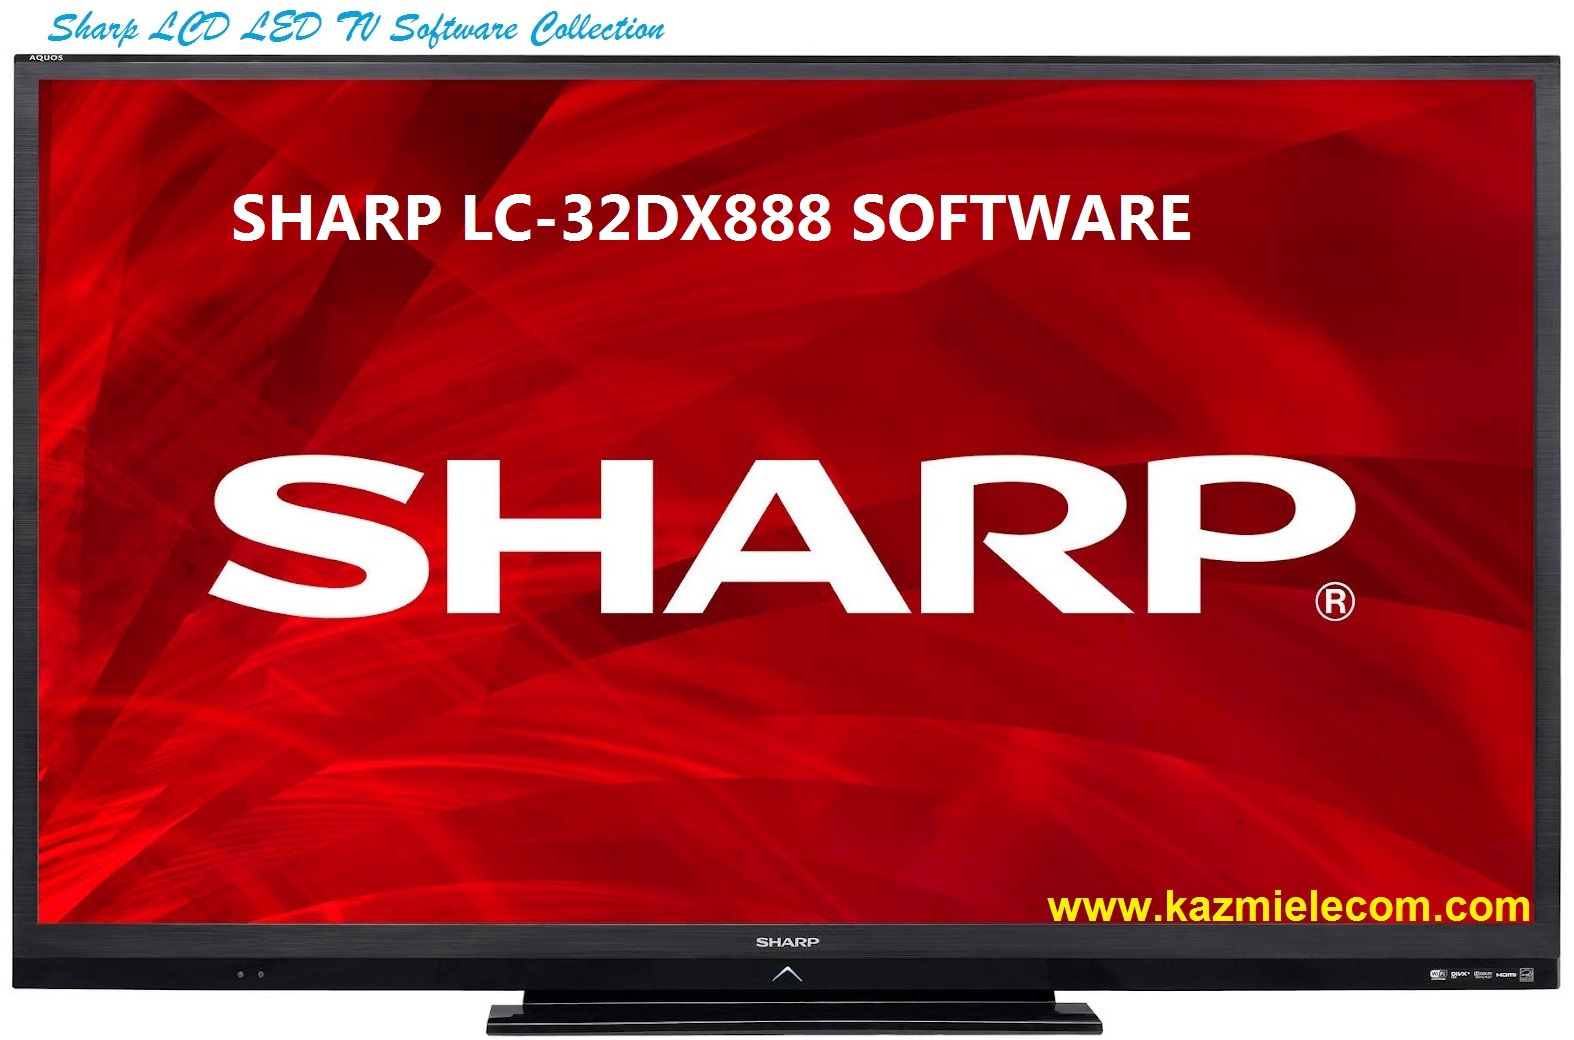 Sharp Lc-32Dx888